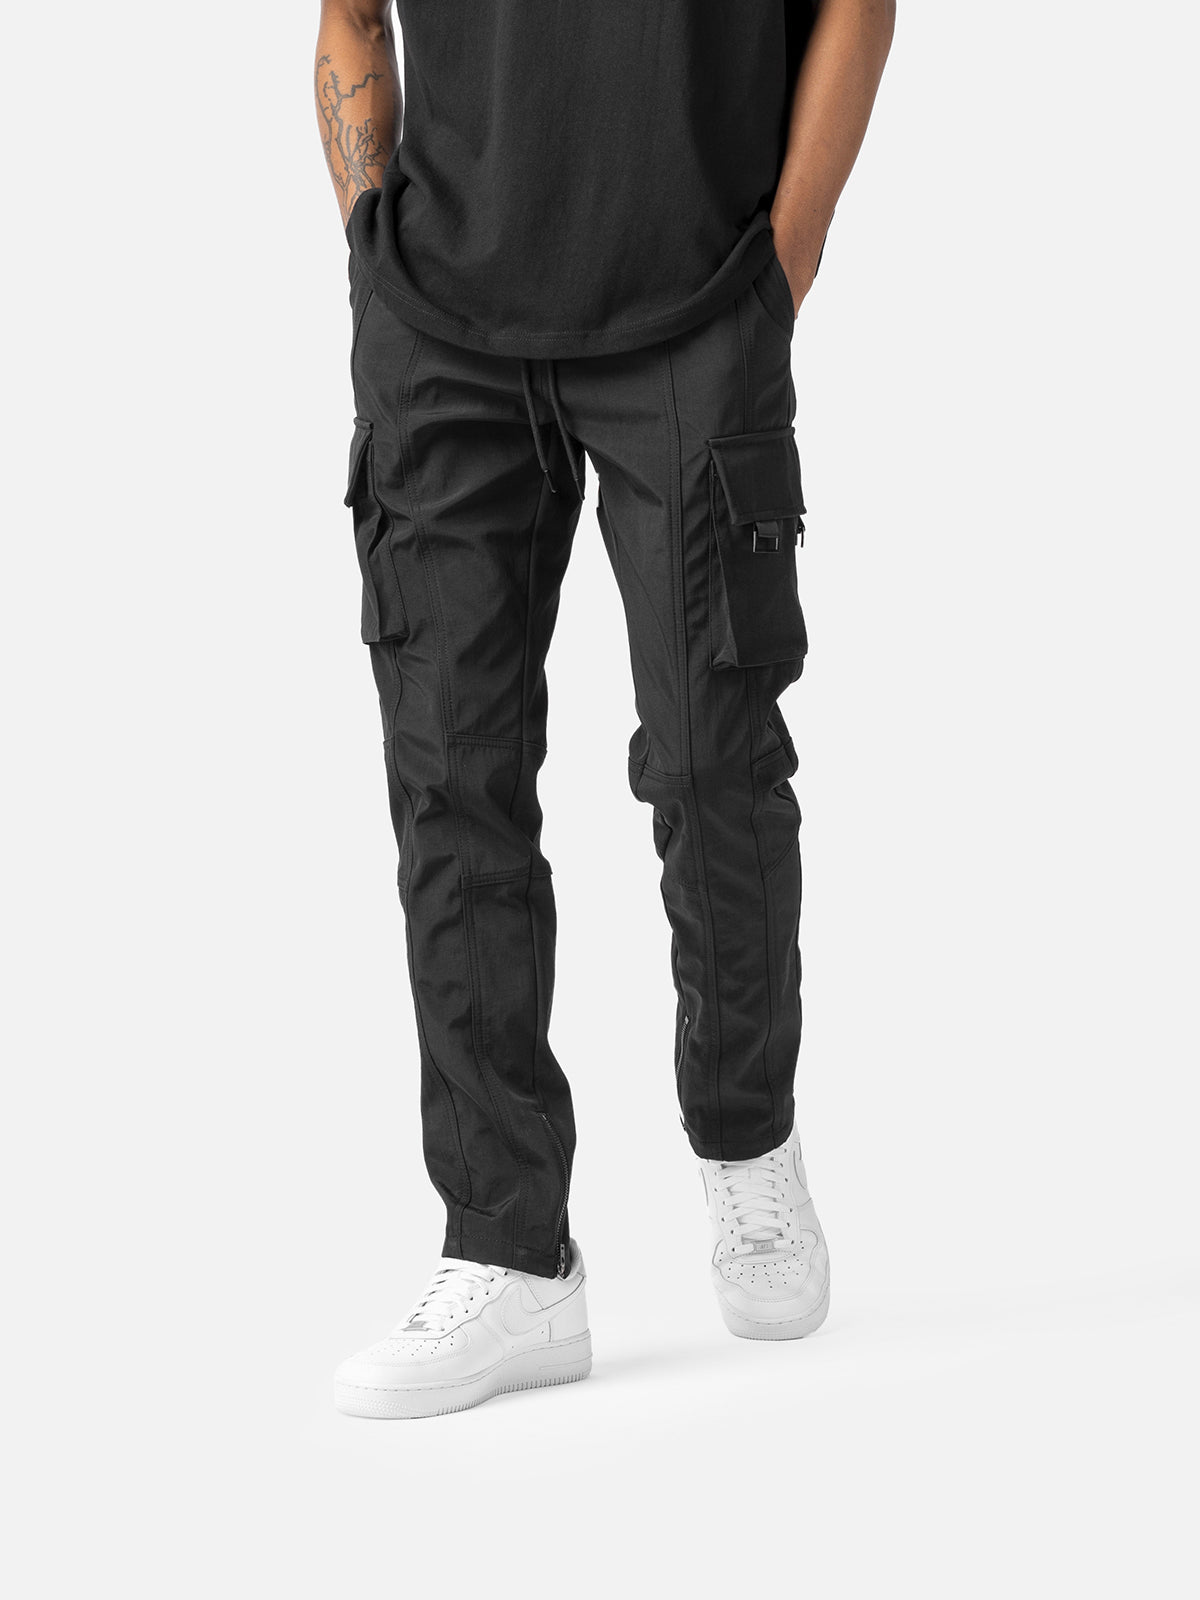 Trendy Men's Cargo pants/Black Cargos/6 Pocket CargosTrousers